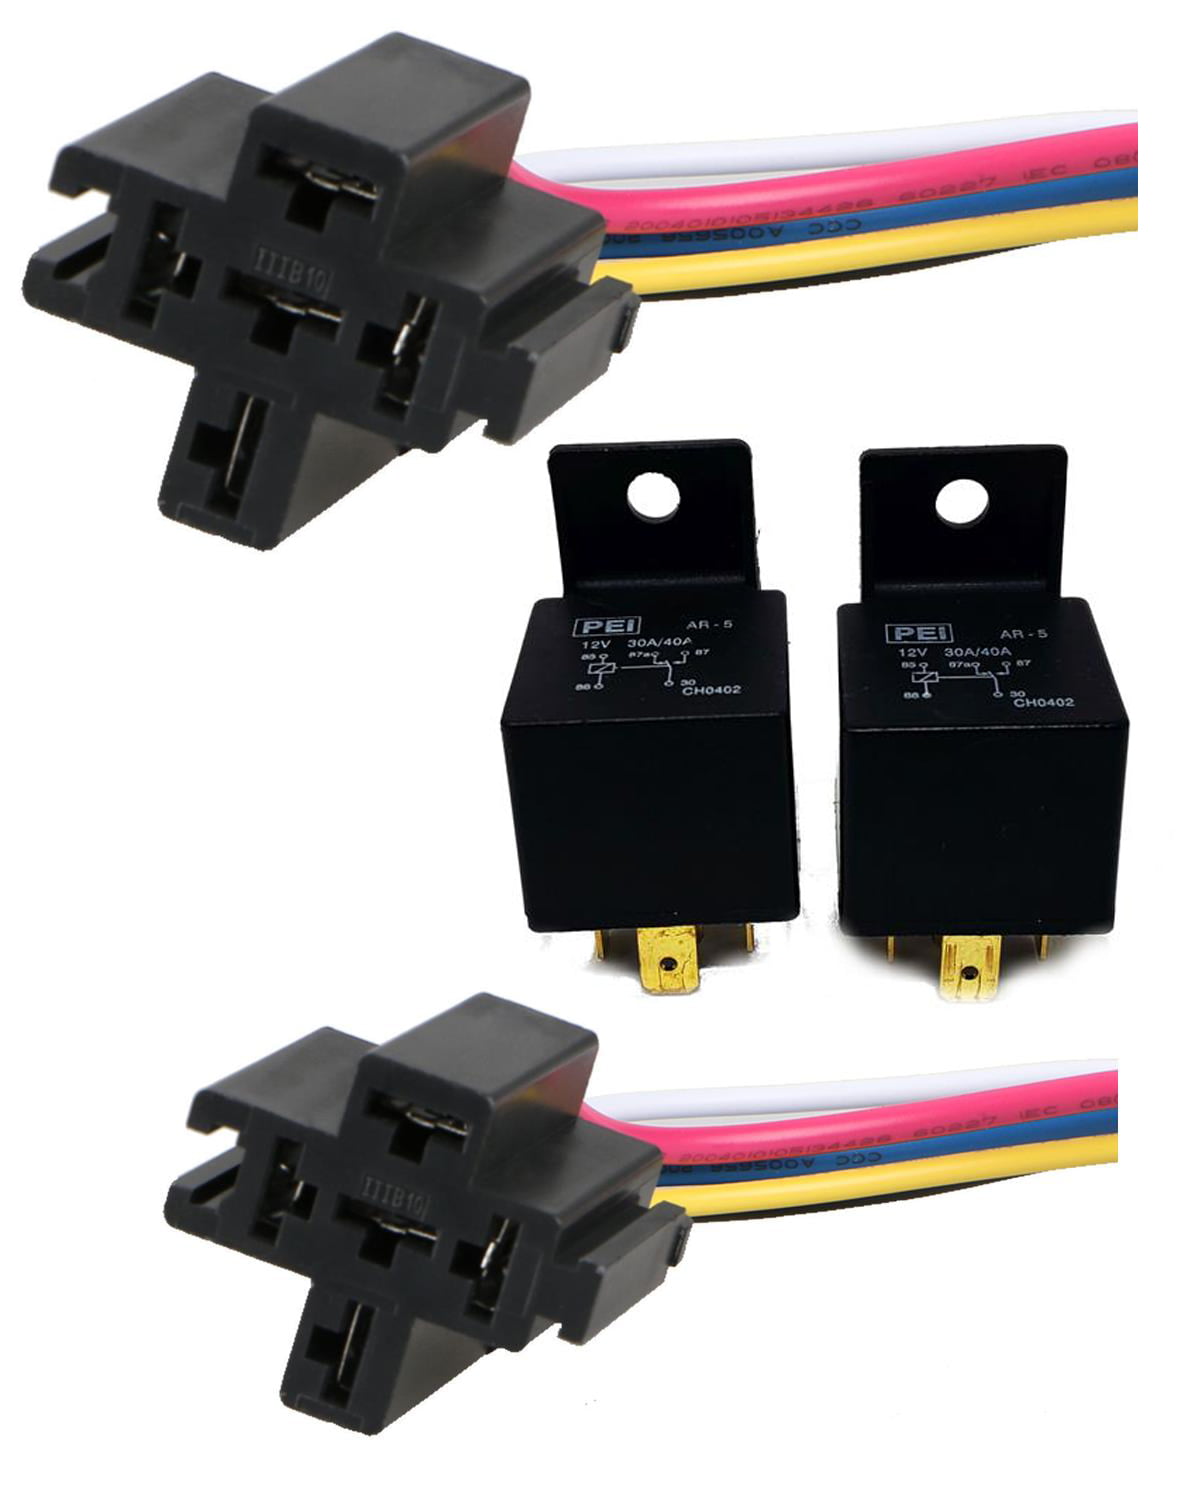 DC 12V Car SPDT Automotive Relay 5 Pin 5 Wires w/Harness Socket 30/40 Amp jm 